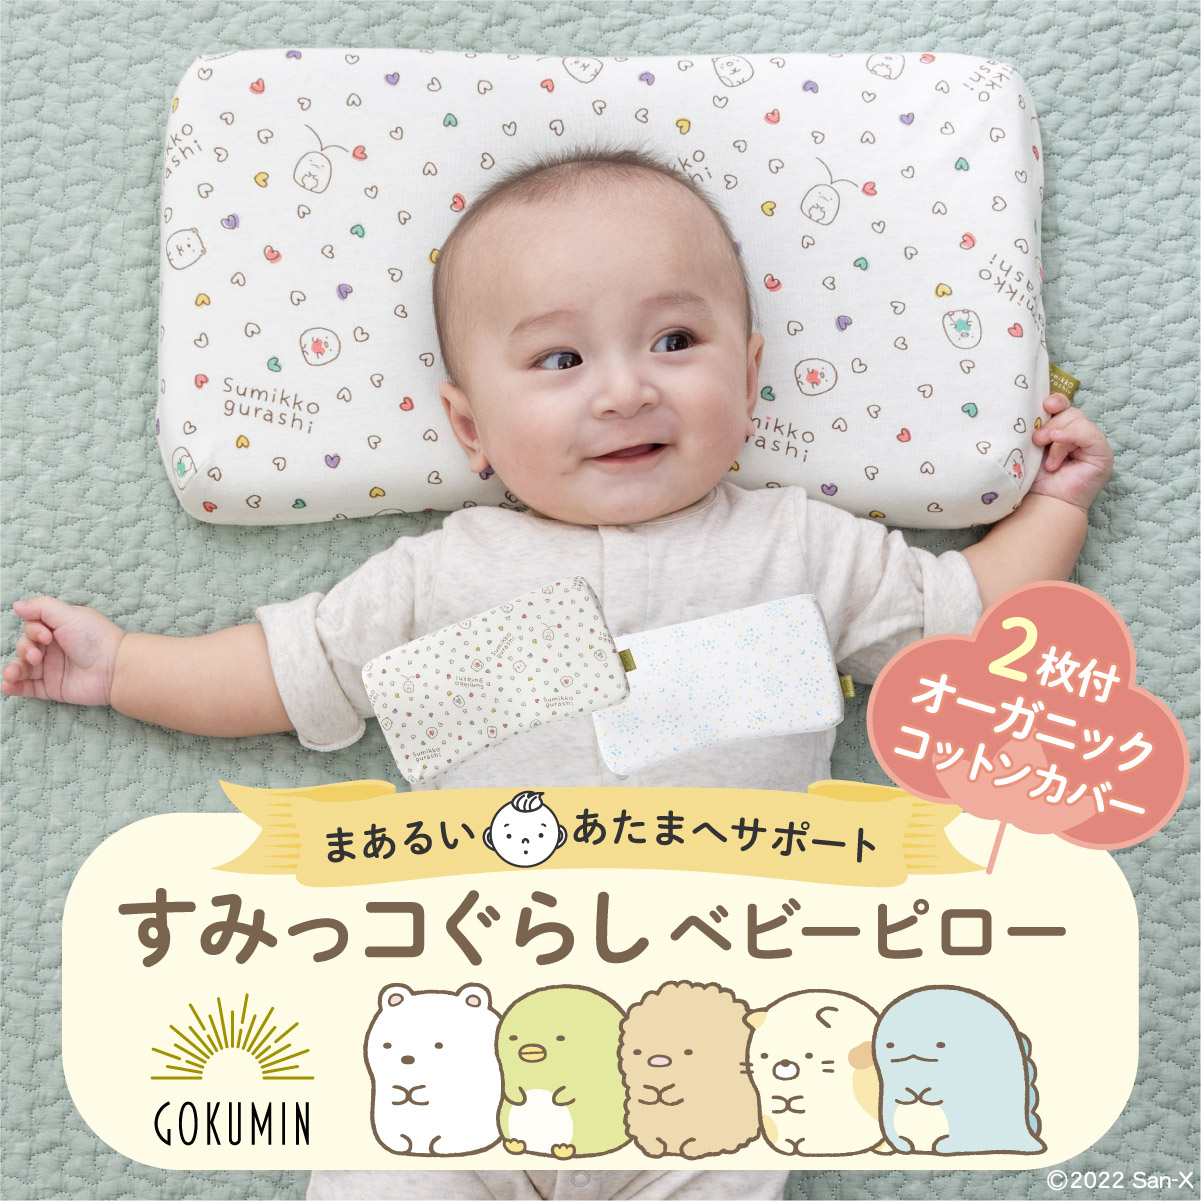 Gokumin すみっコぐらし ベビーピロー ベビー枕 新生児 向き癖 向きぐせ 防止 絶壁 頭の形 ファッション